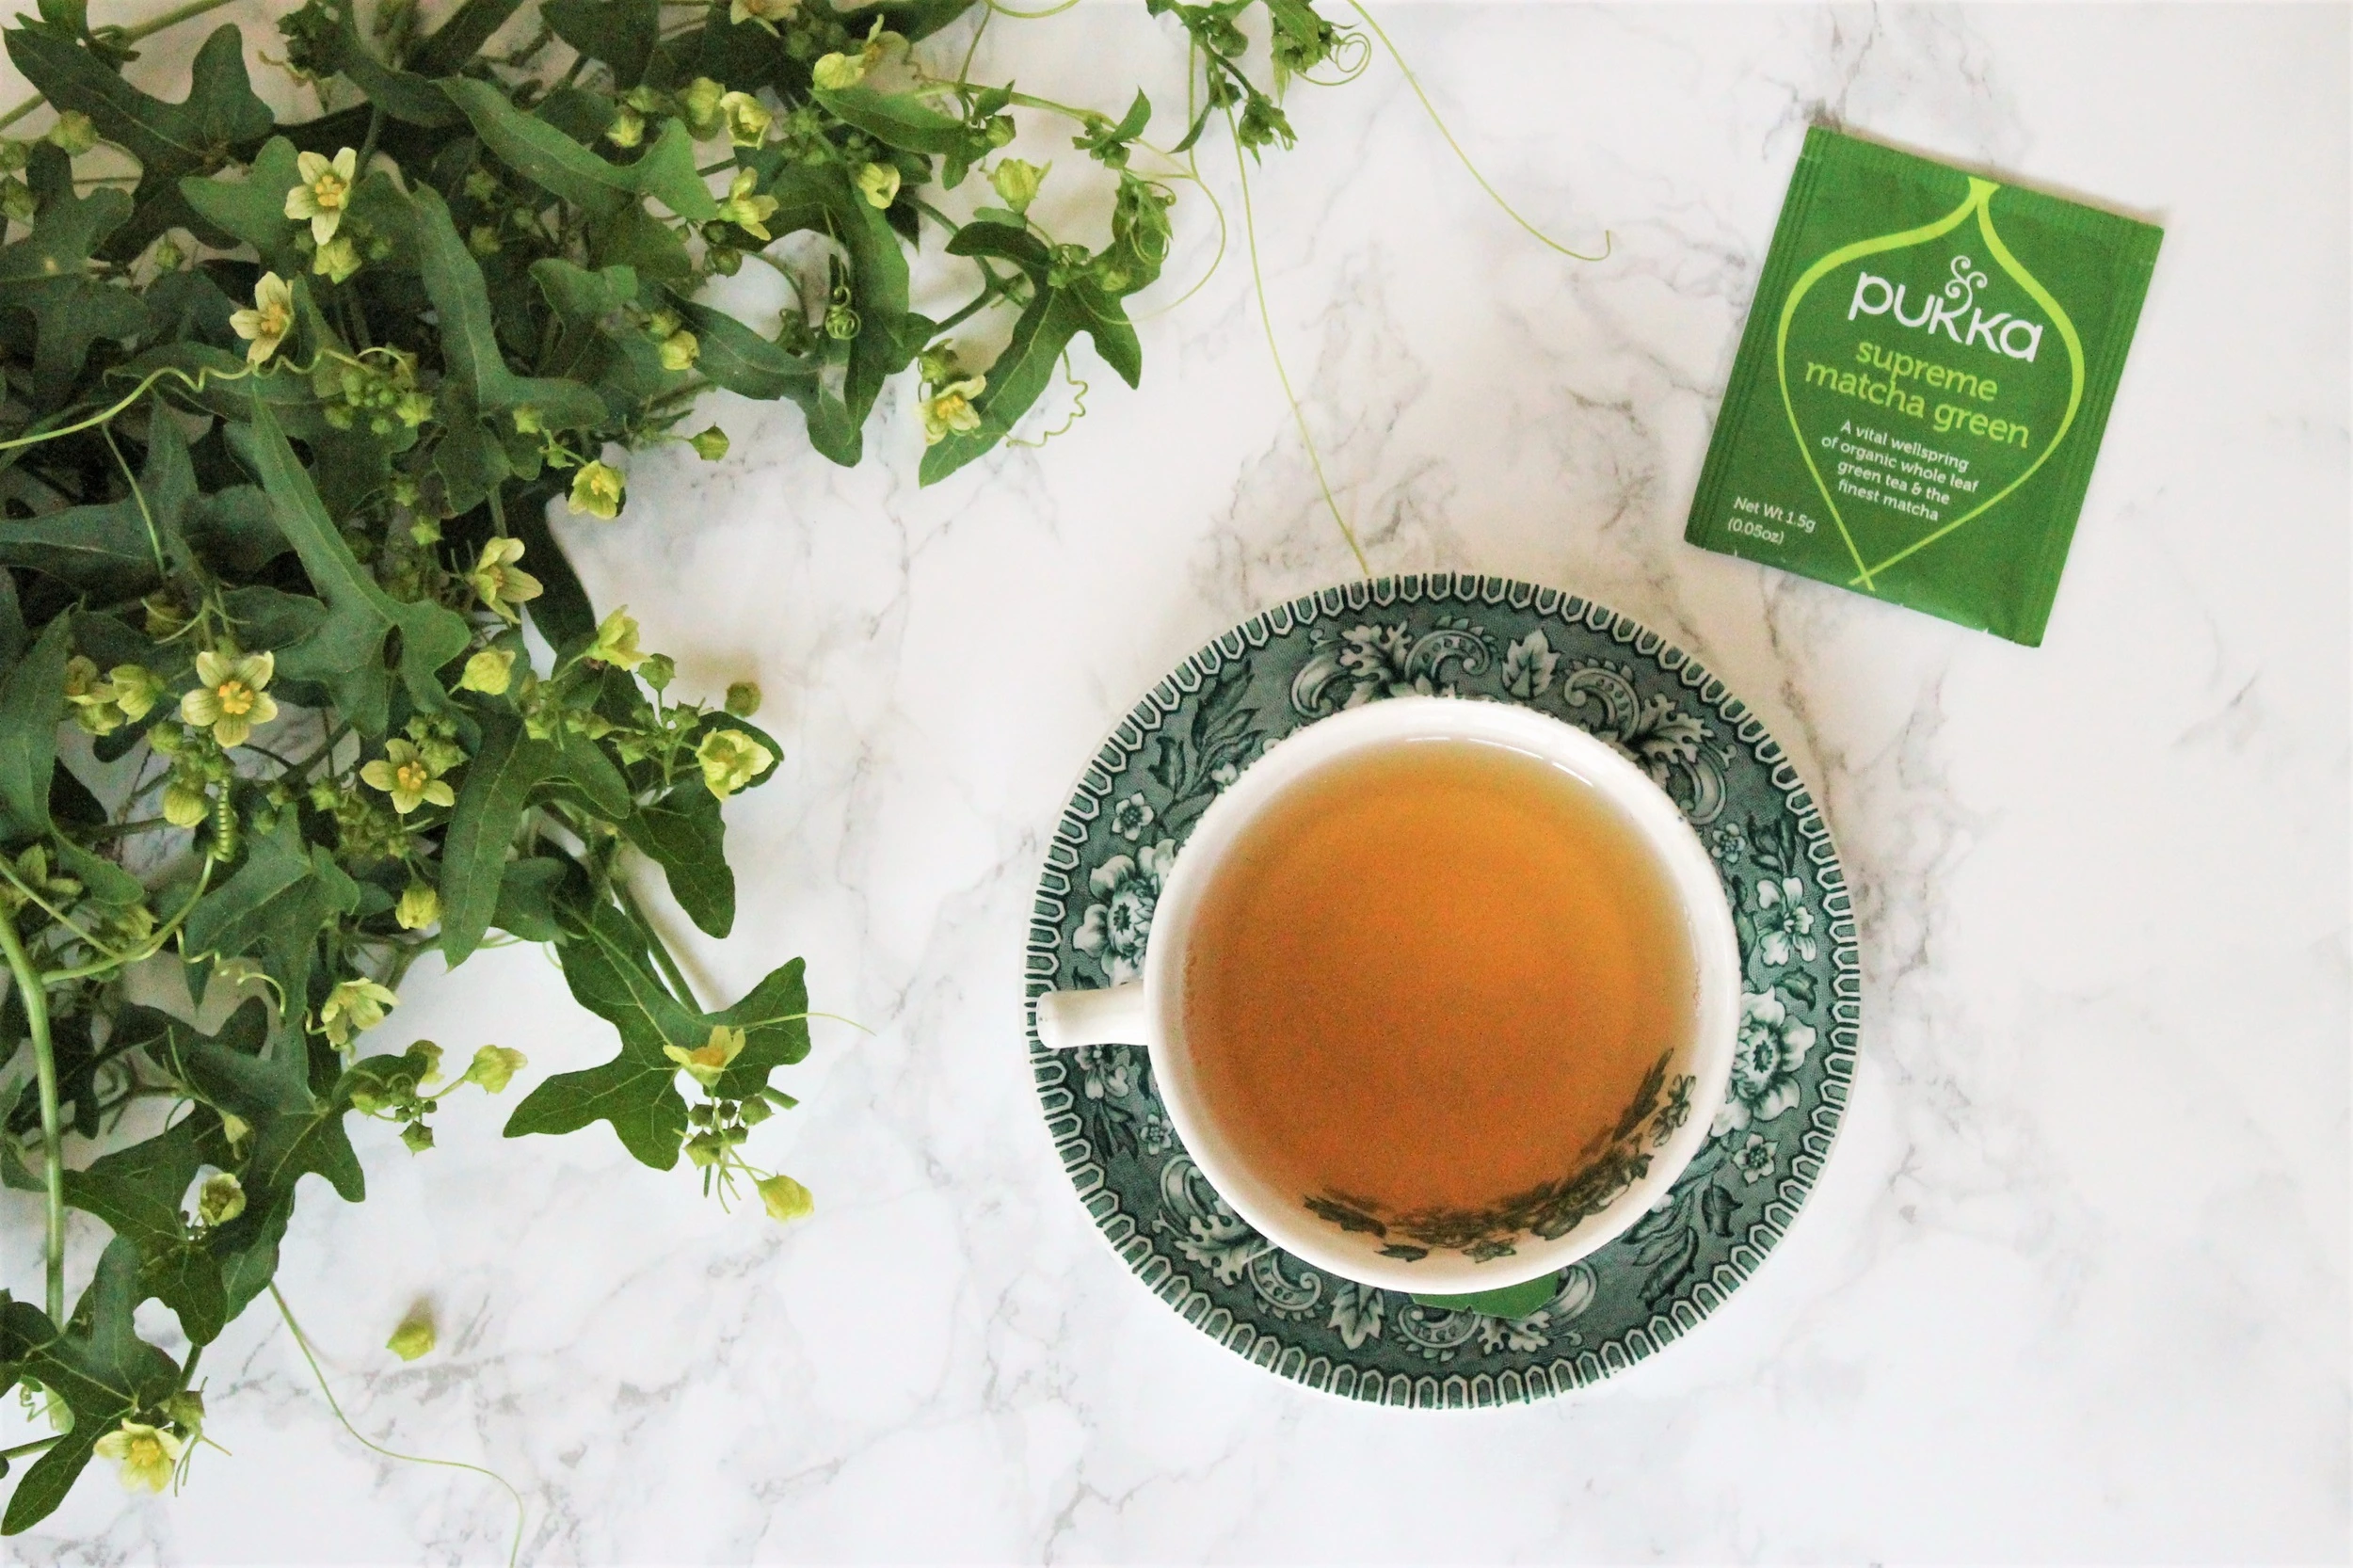 pukka supreme matcha green tea review